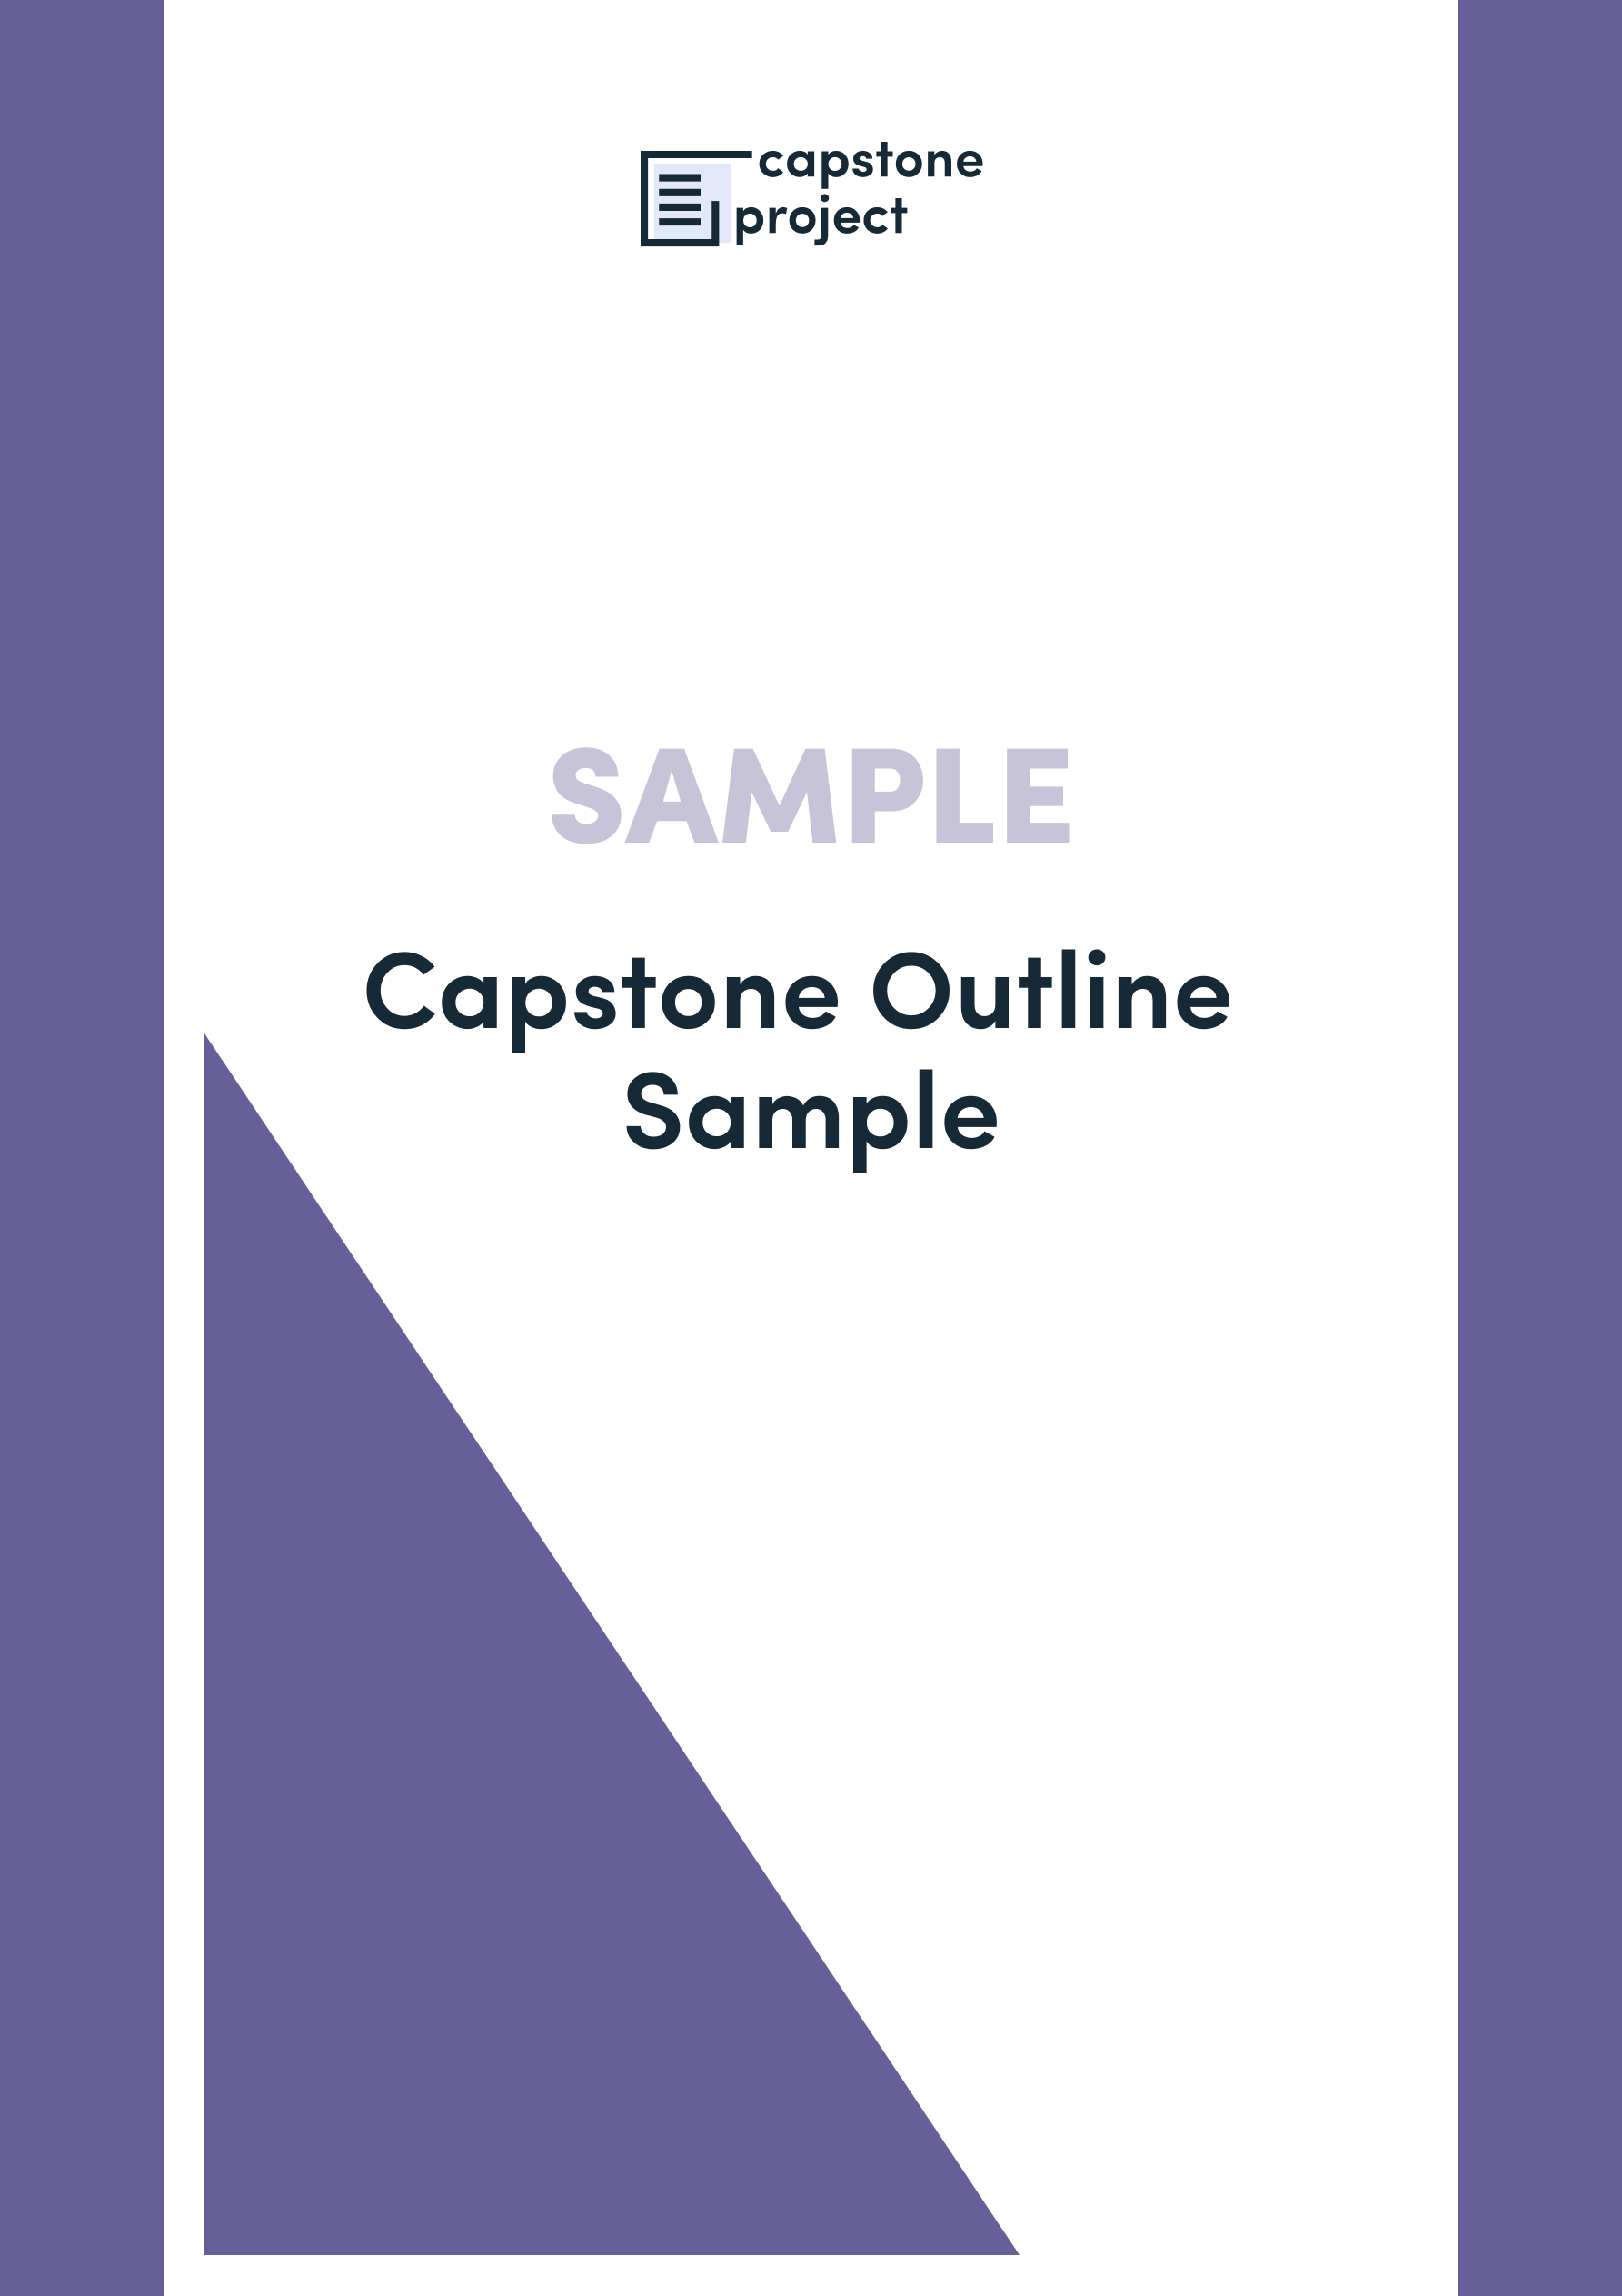 senior capstone project ideas